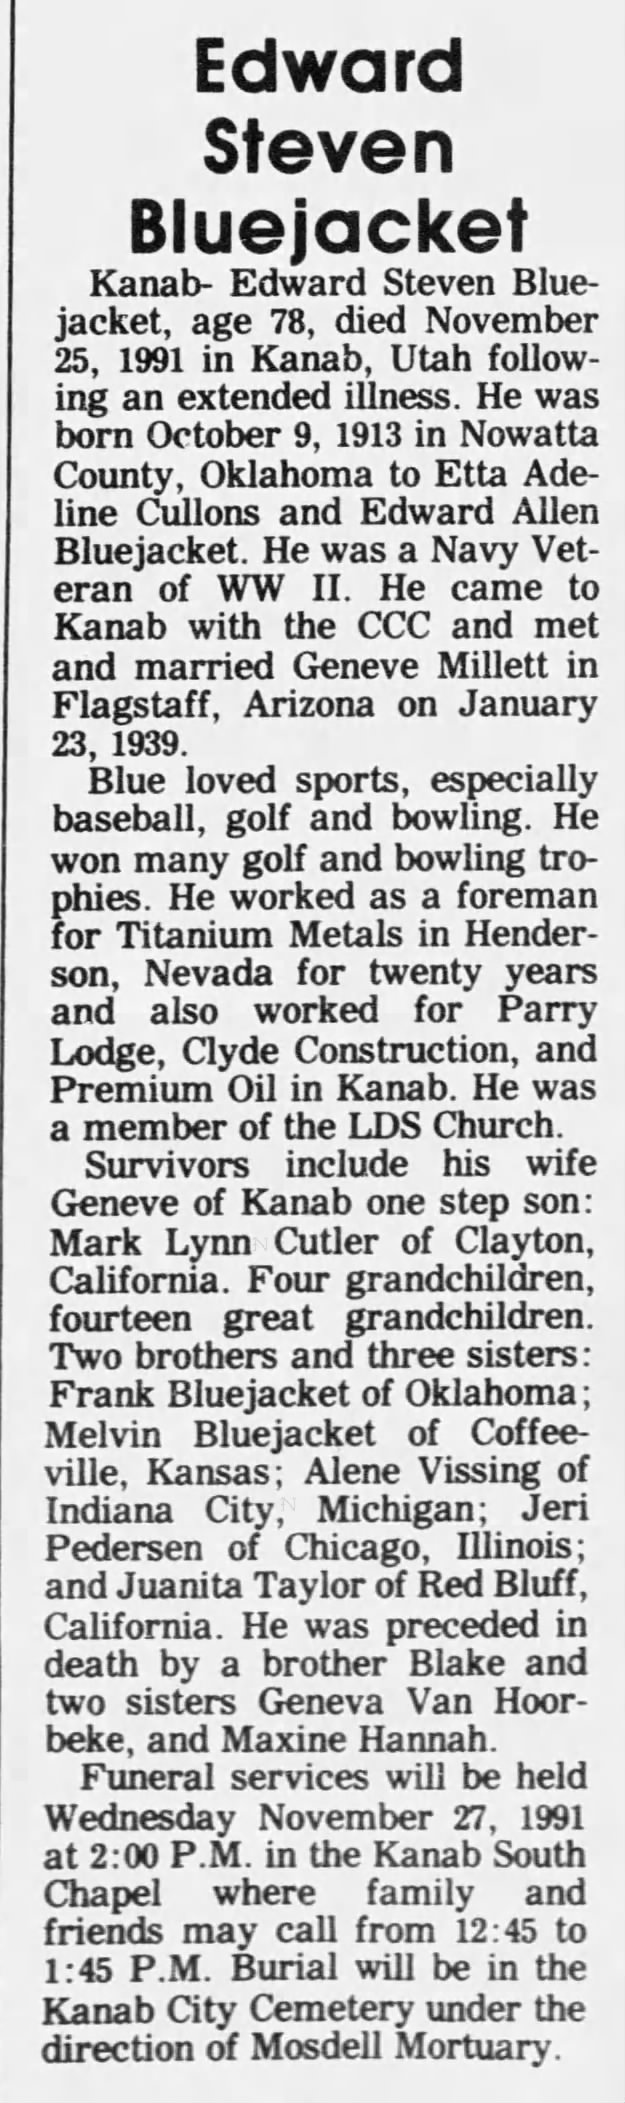 Edward Steven Bluejacket, 78. Obituary. 26 Nov 1991